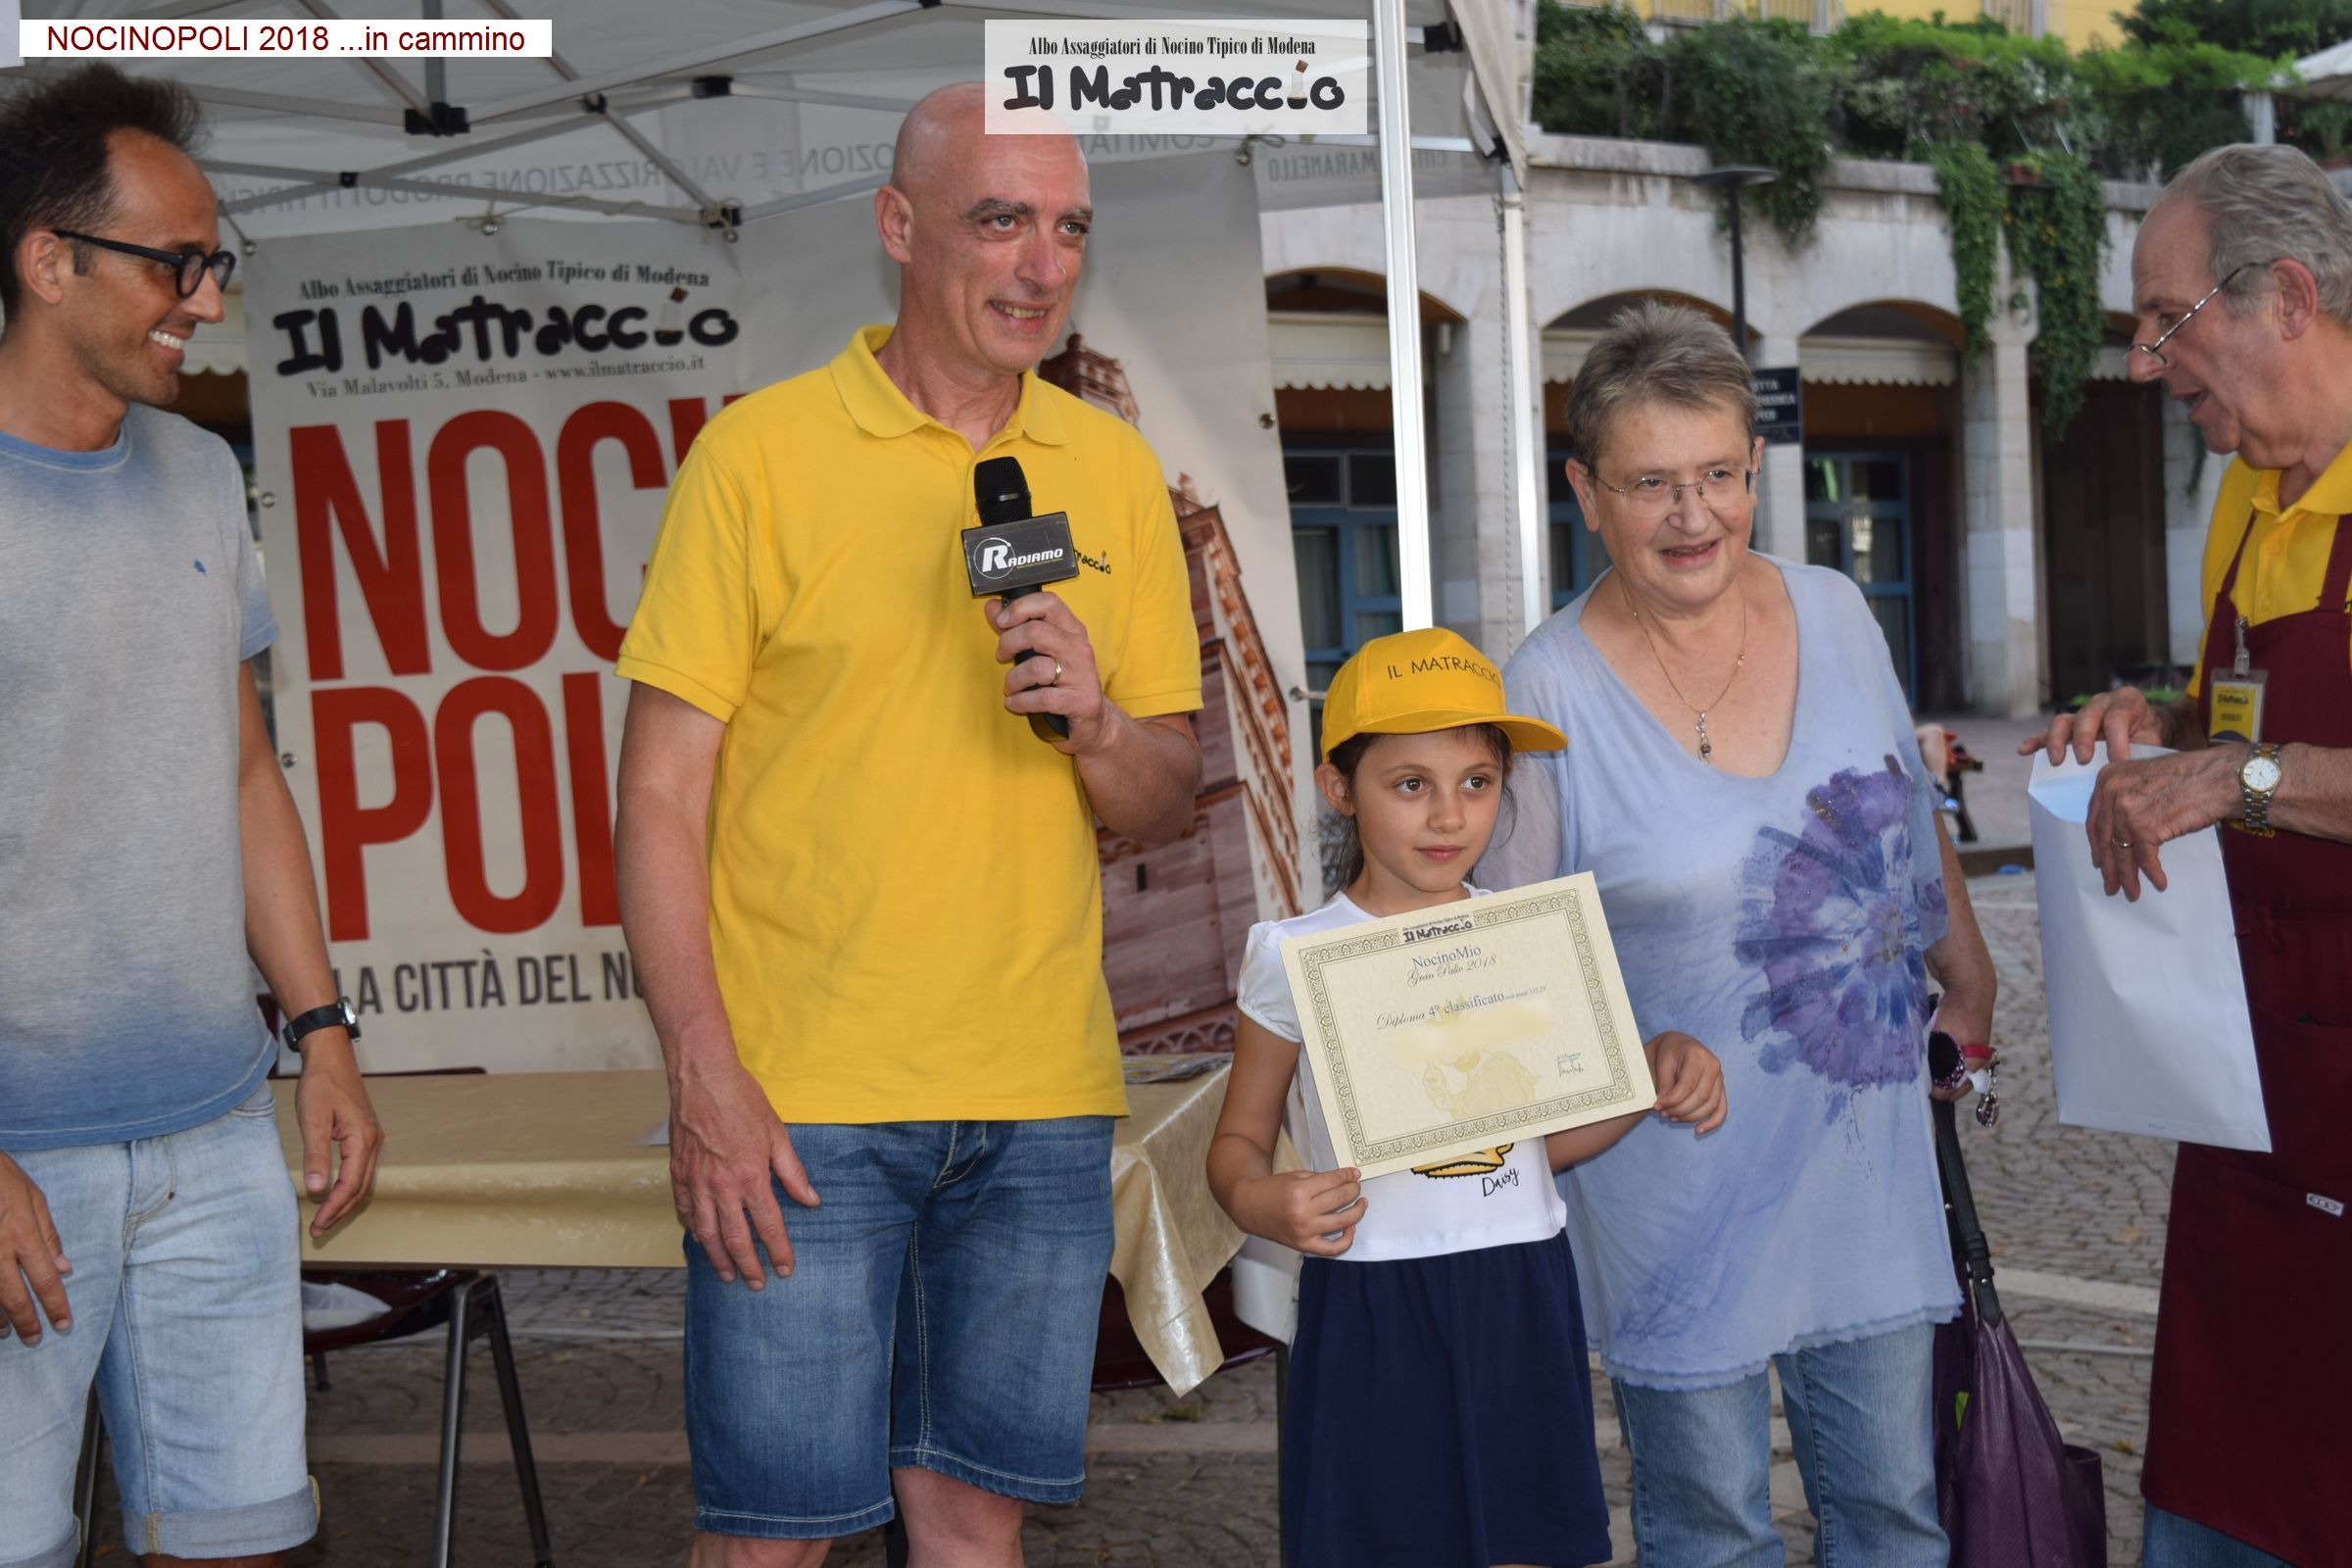 Nocinopoli 2018 - 114